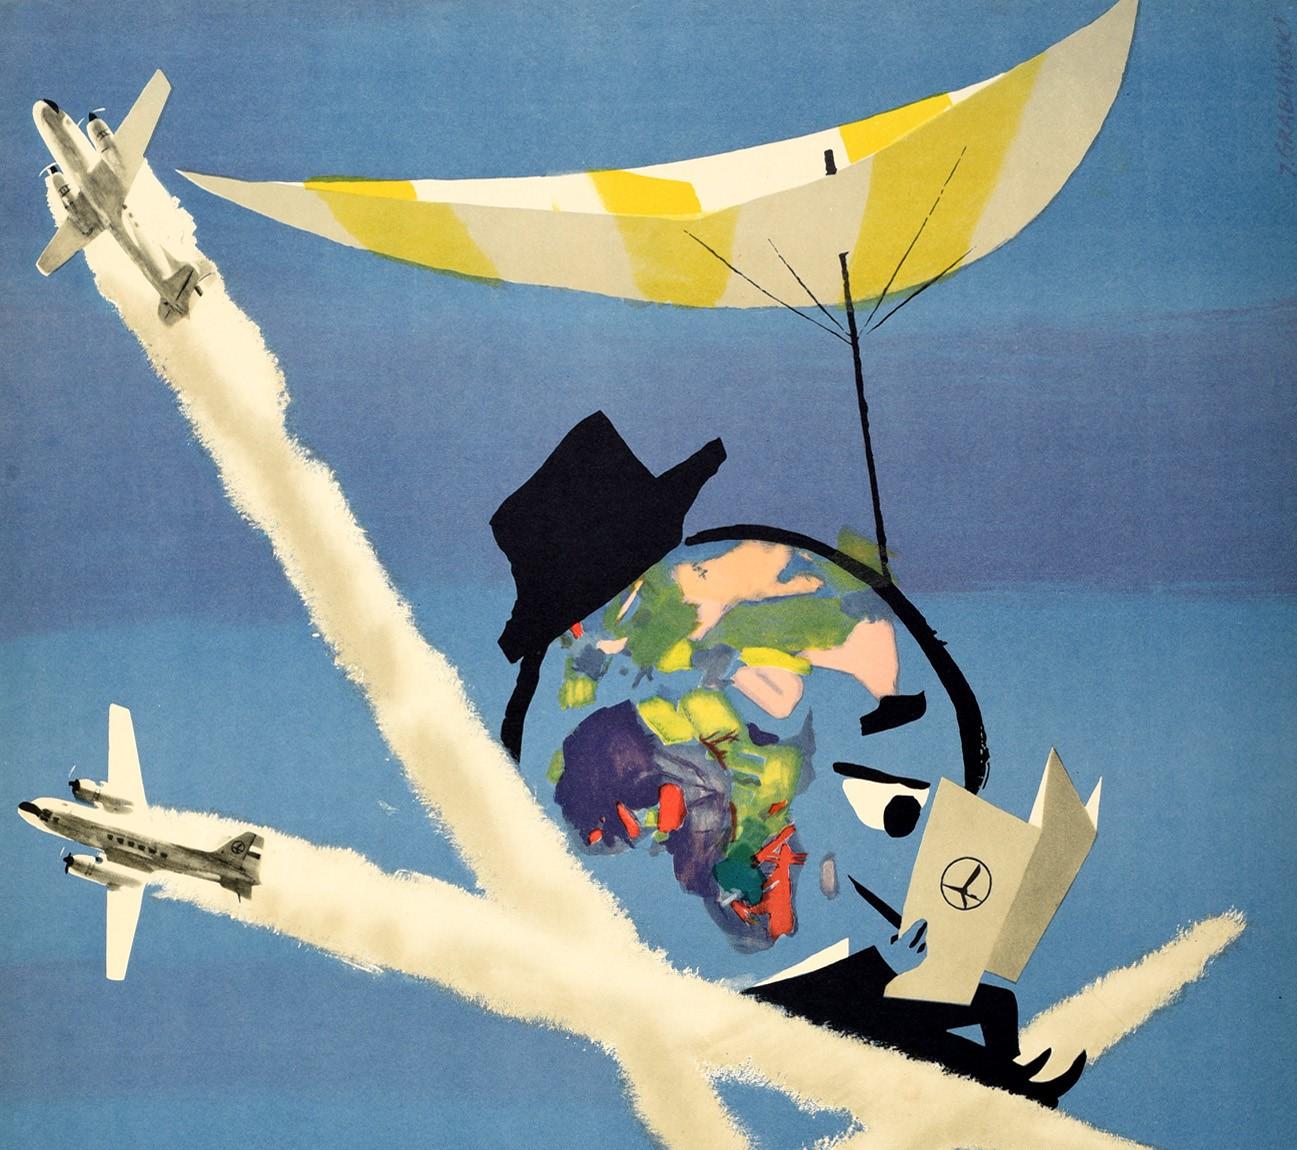 Original Vintage Poster For LOT Polish Airlines World Travel Planes Deck Chair - Print by Janusz Grabianski